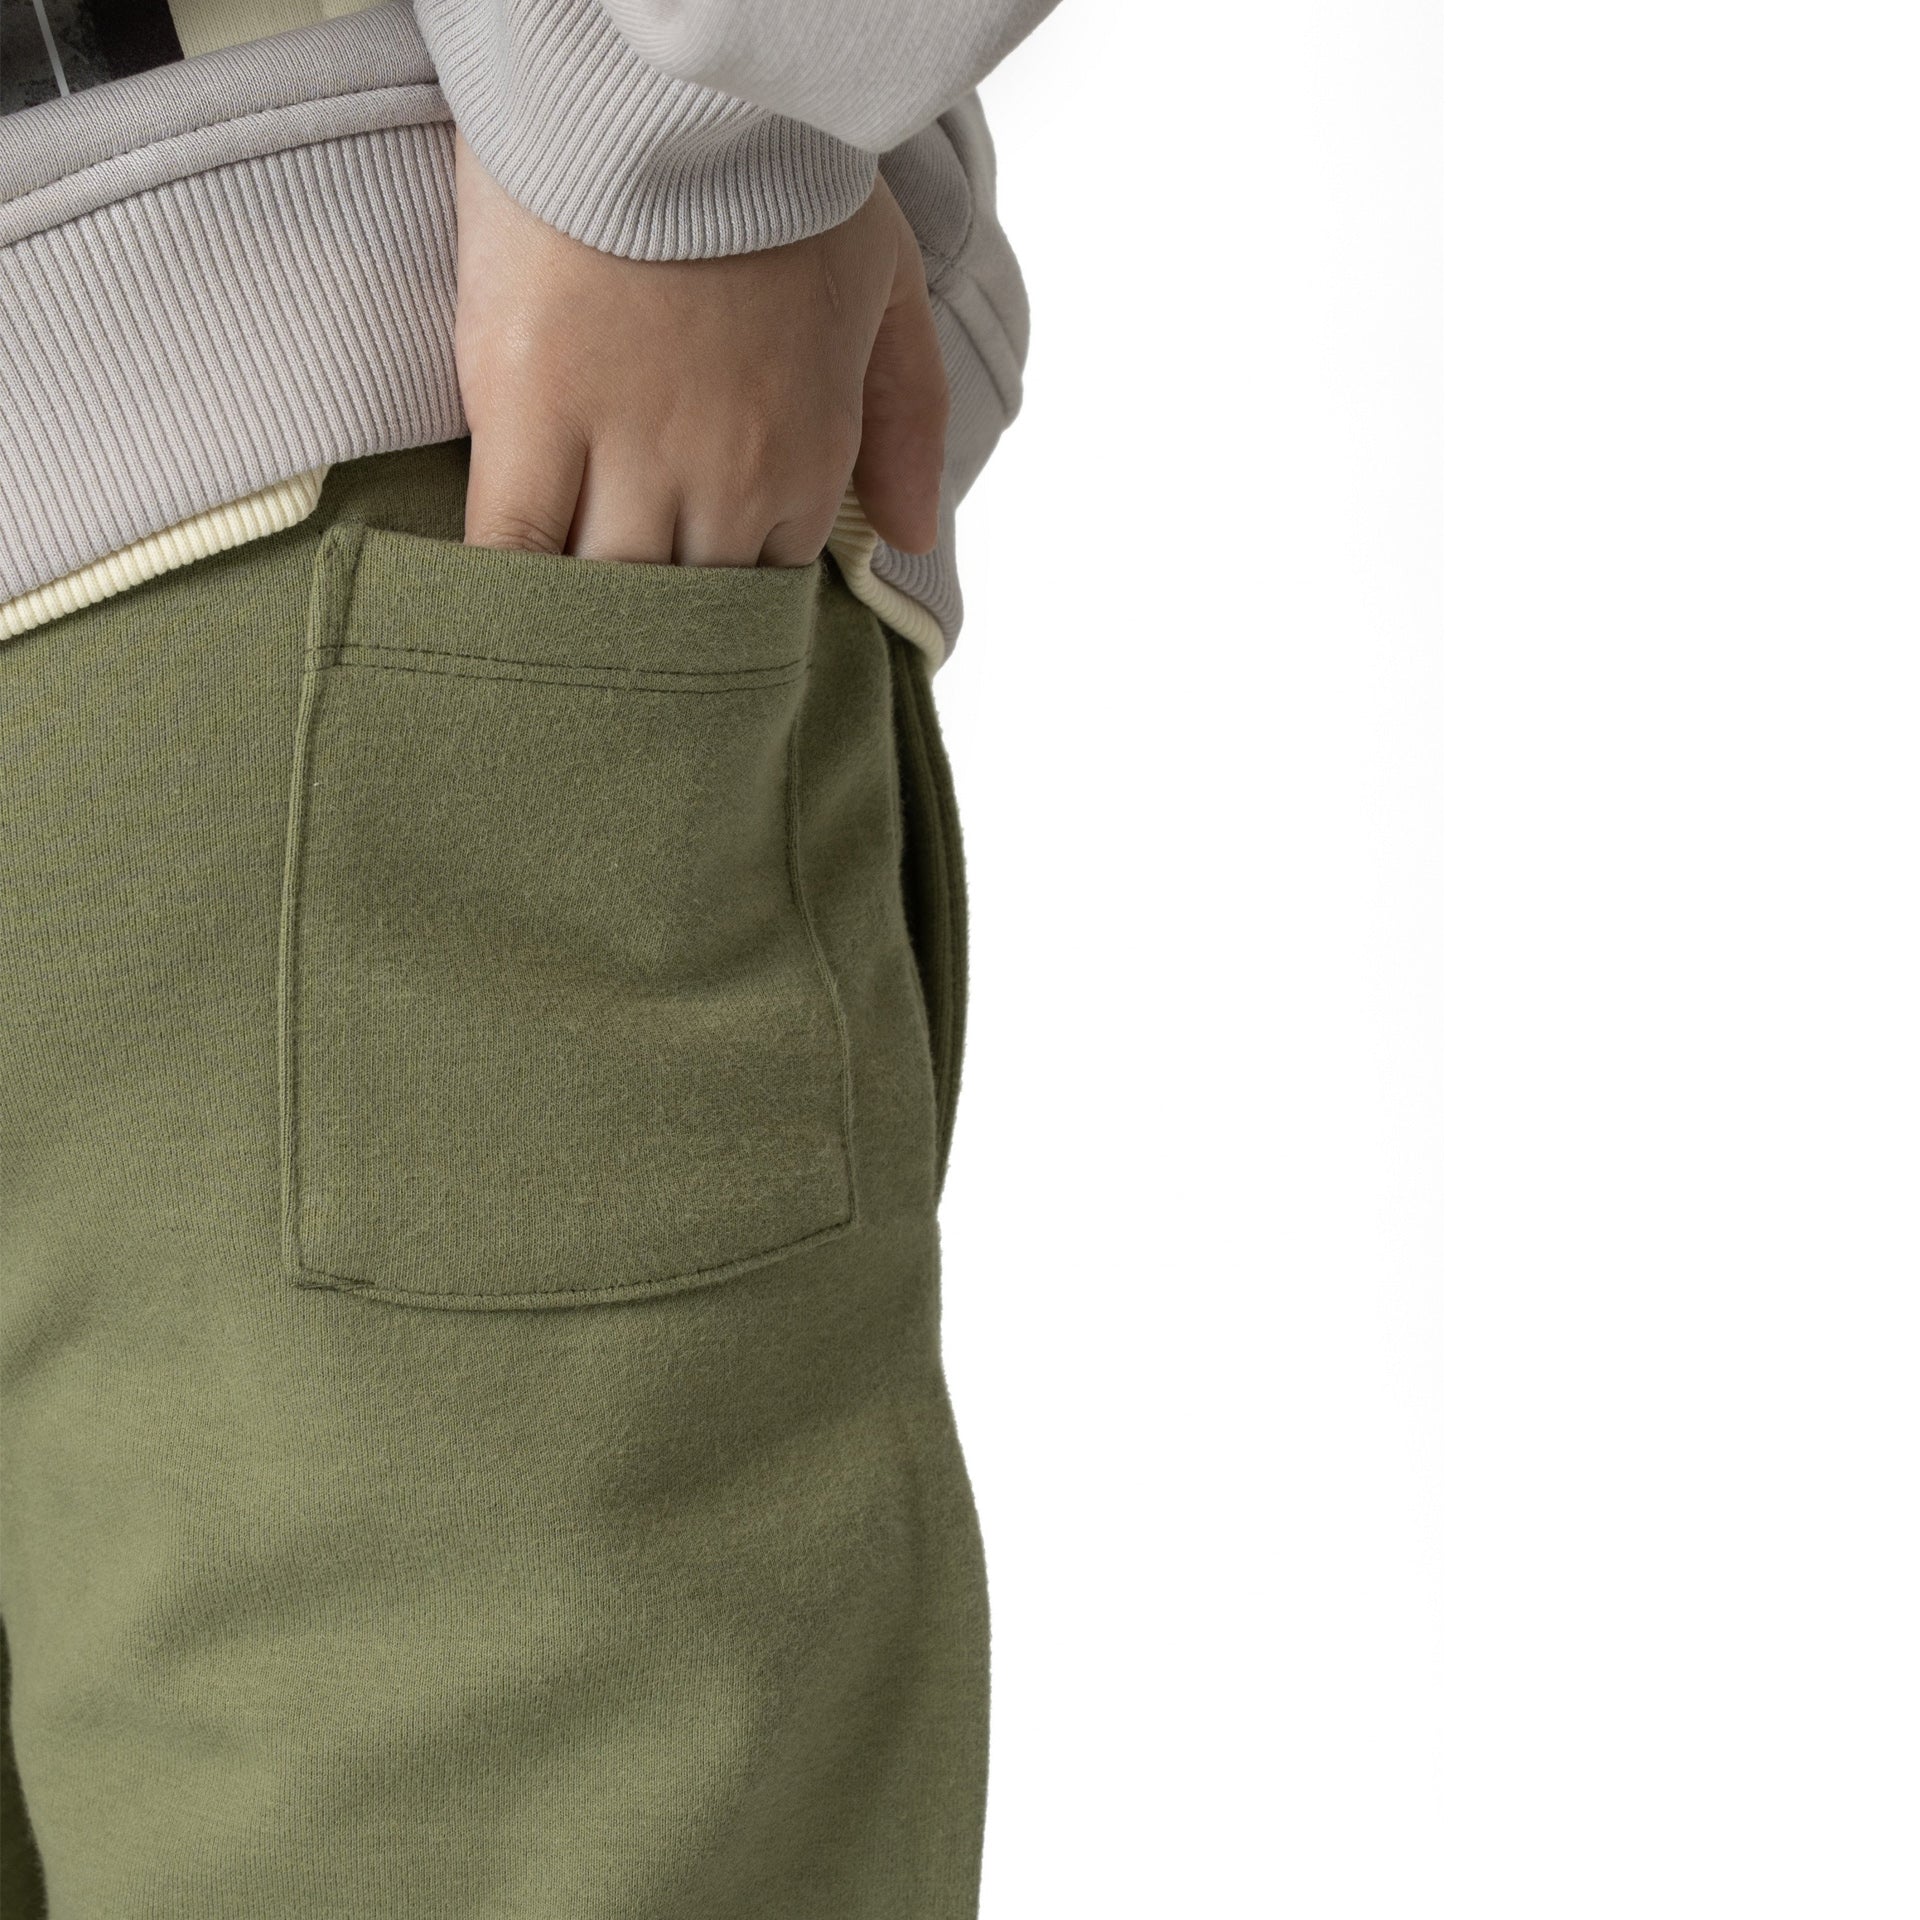 Green Kids Pants By Weaver Design